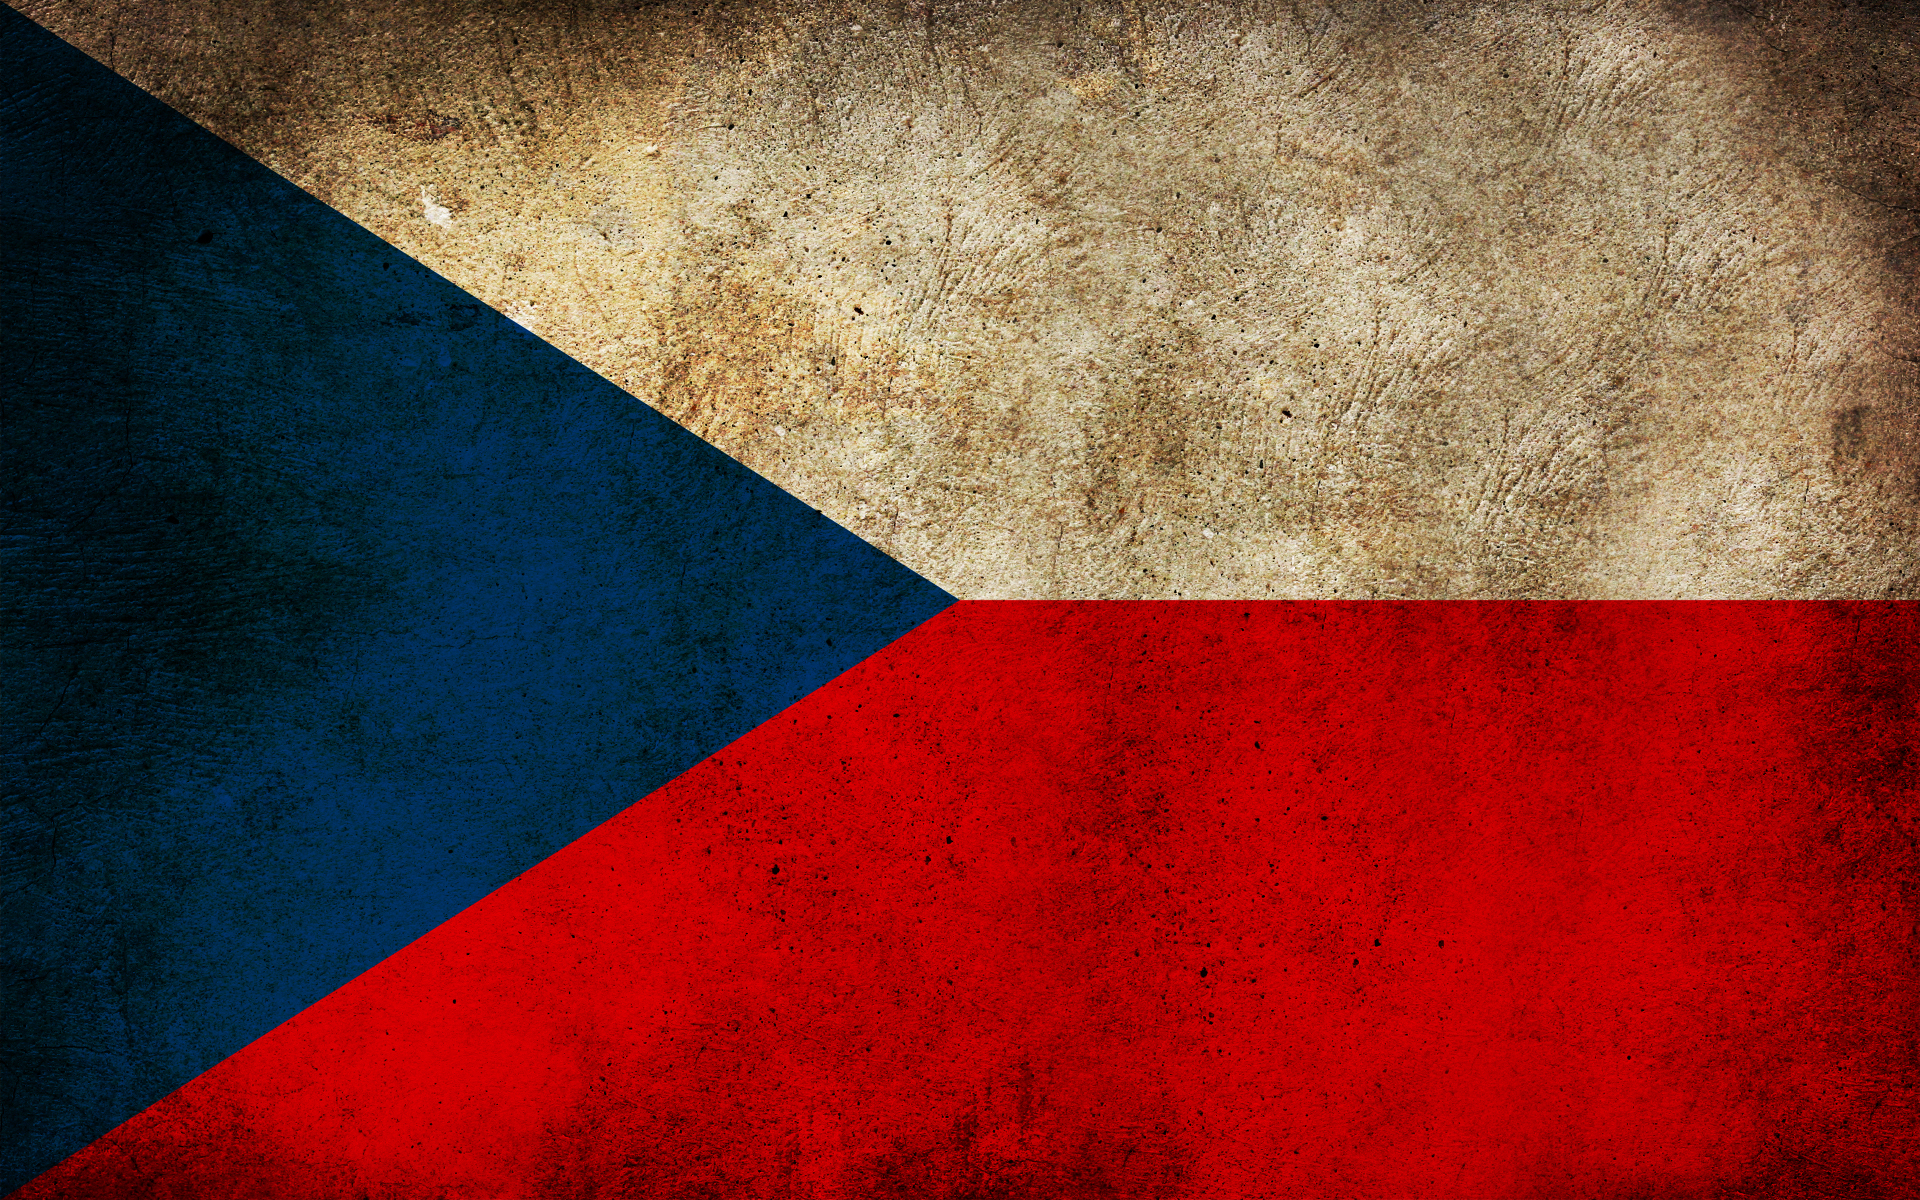 Czexit, The Czech Republic Wants Out Of The EU